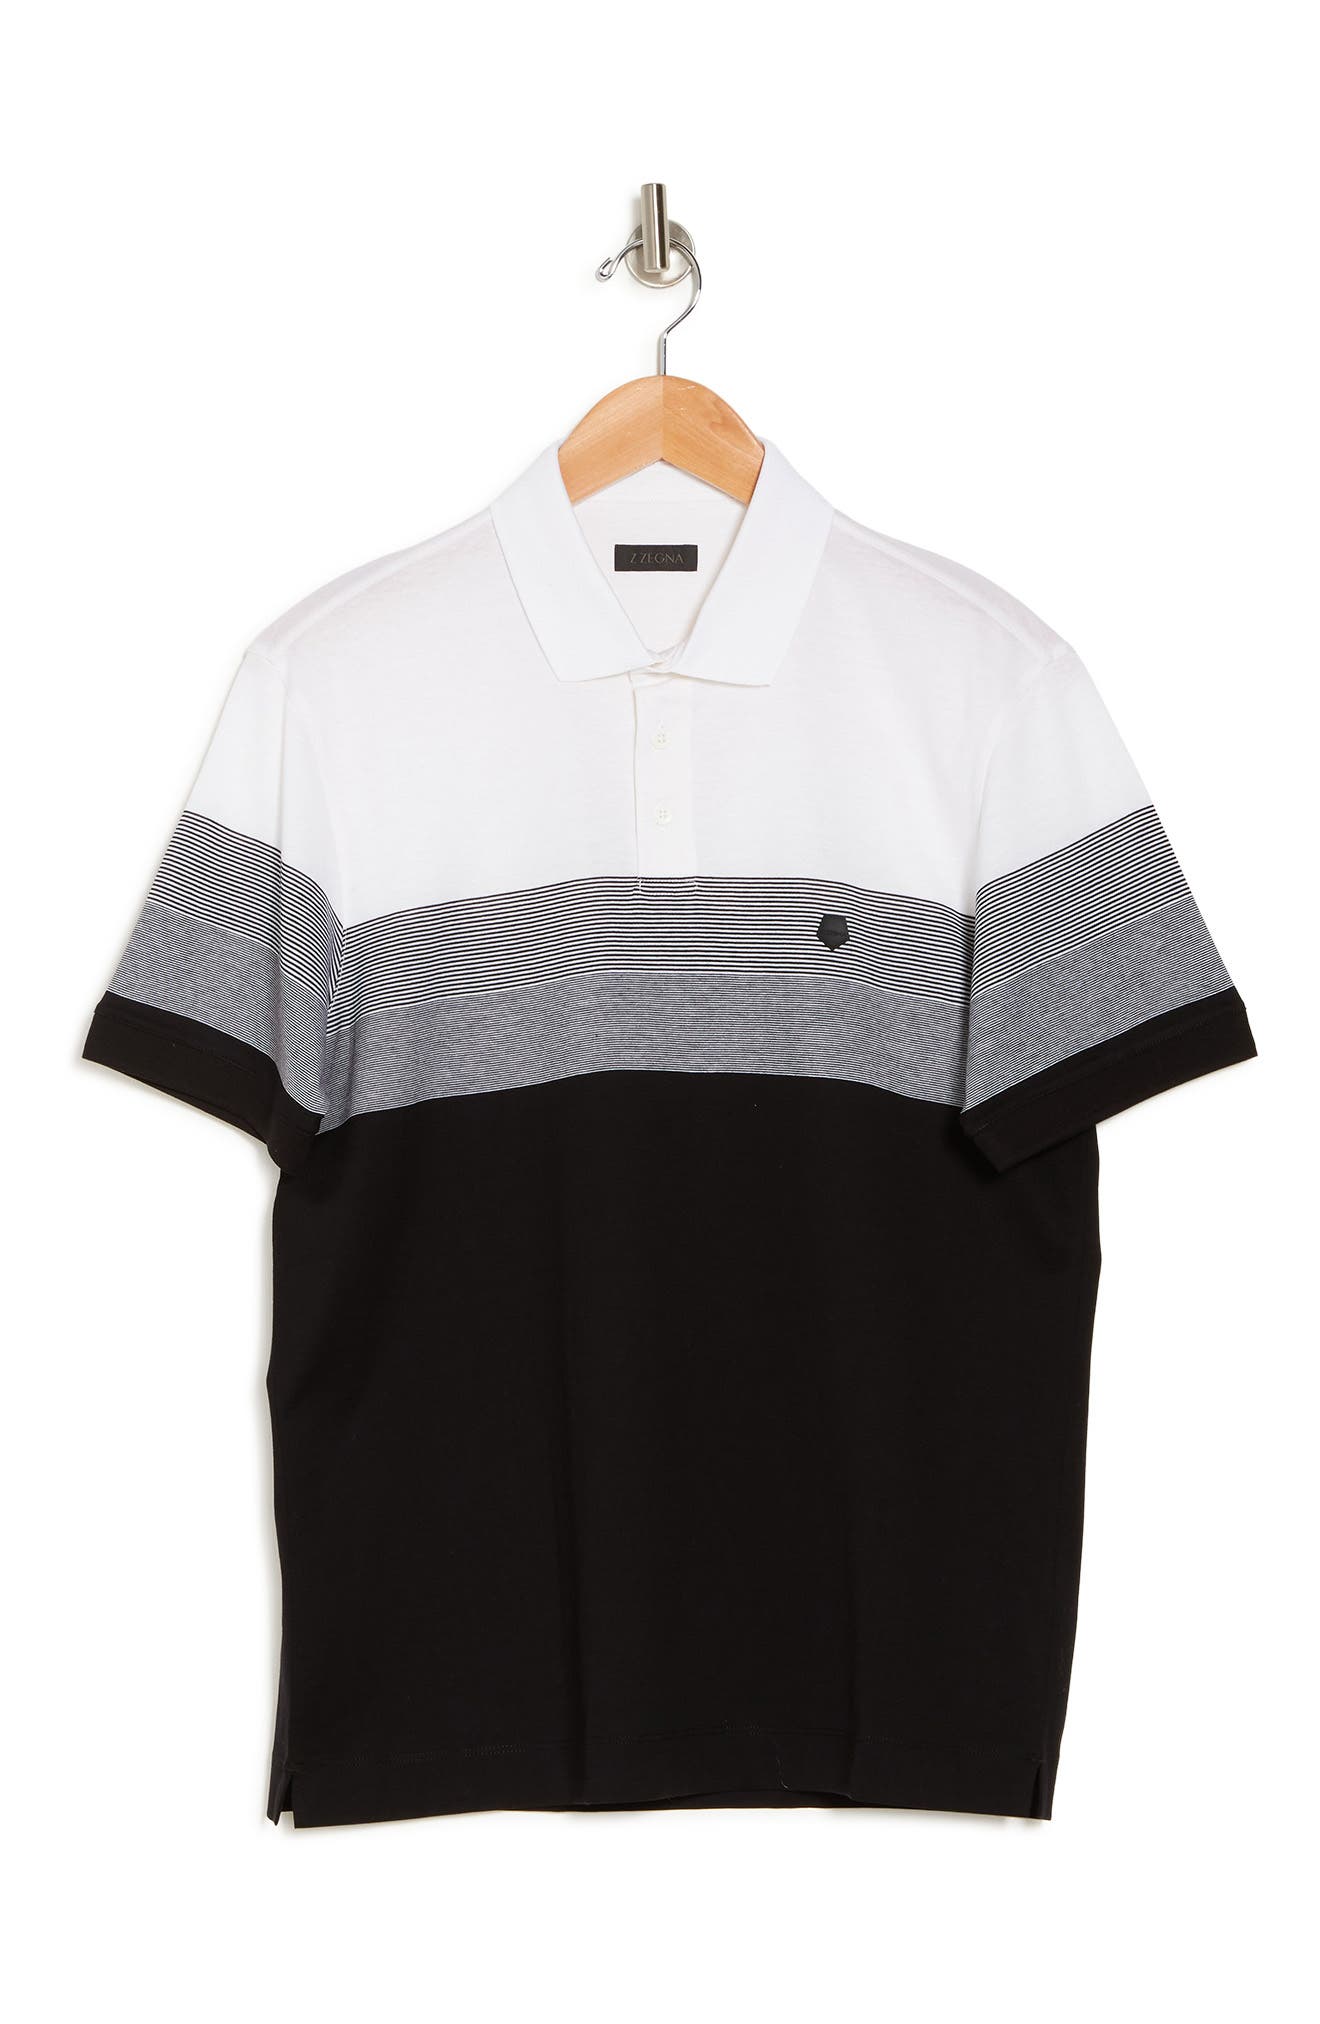 Ermenegildo Zegna Stripe Polo In White/grey/black